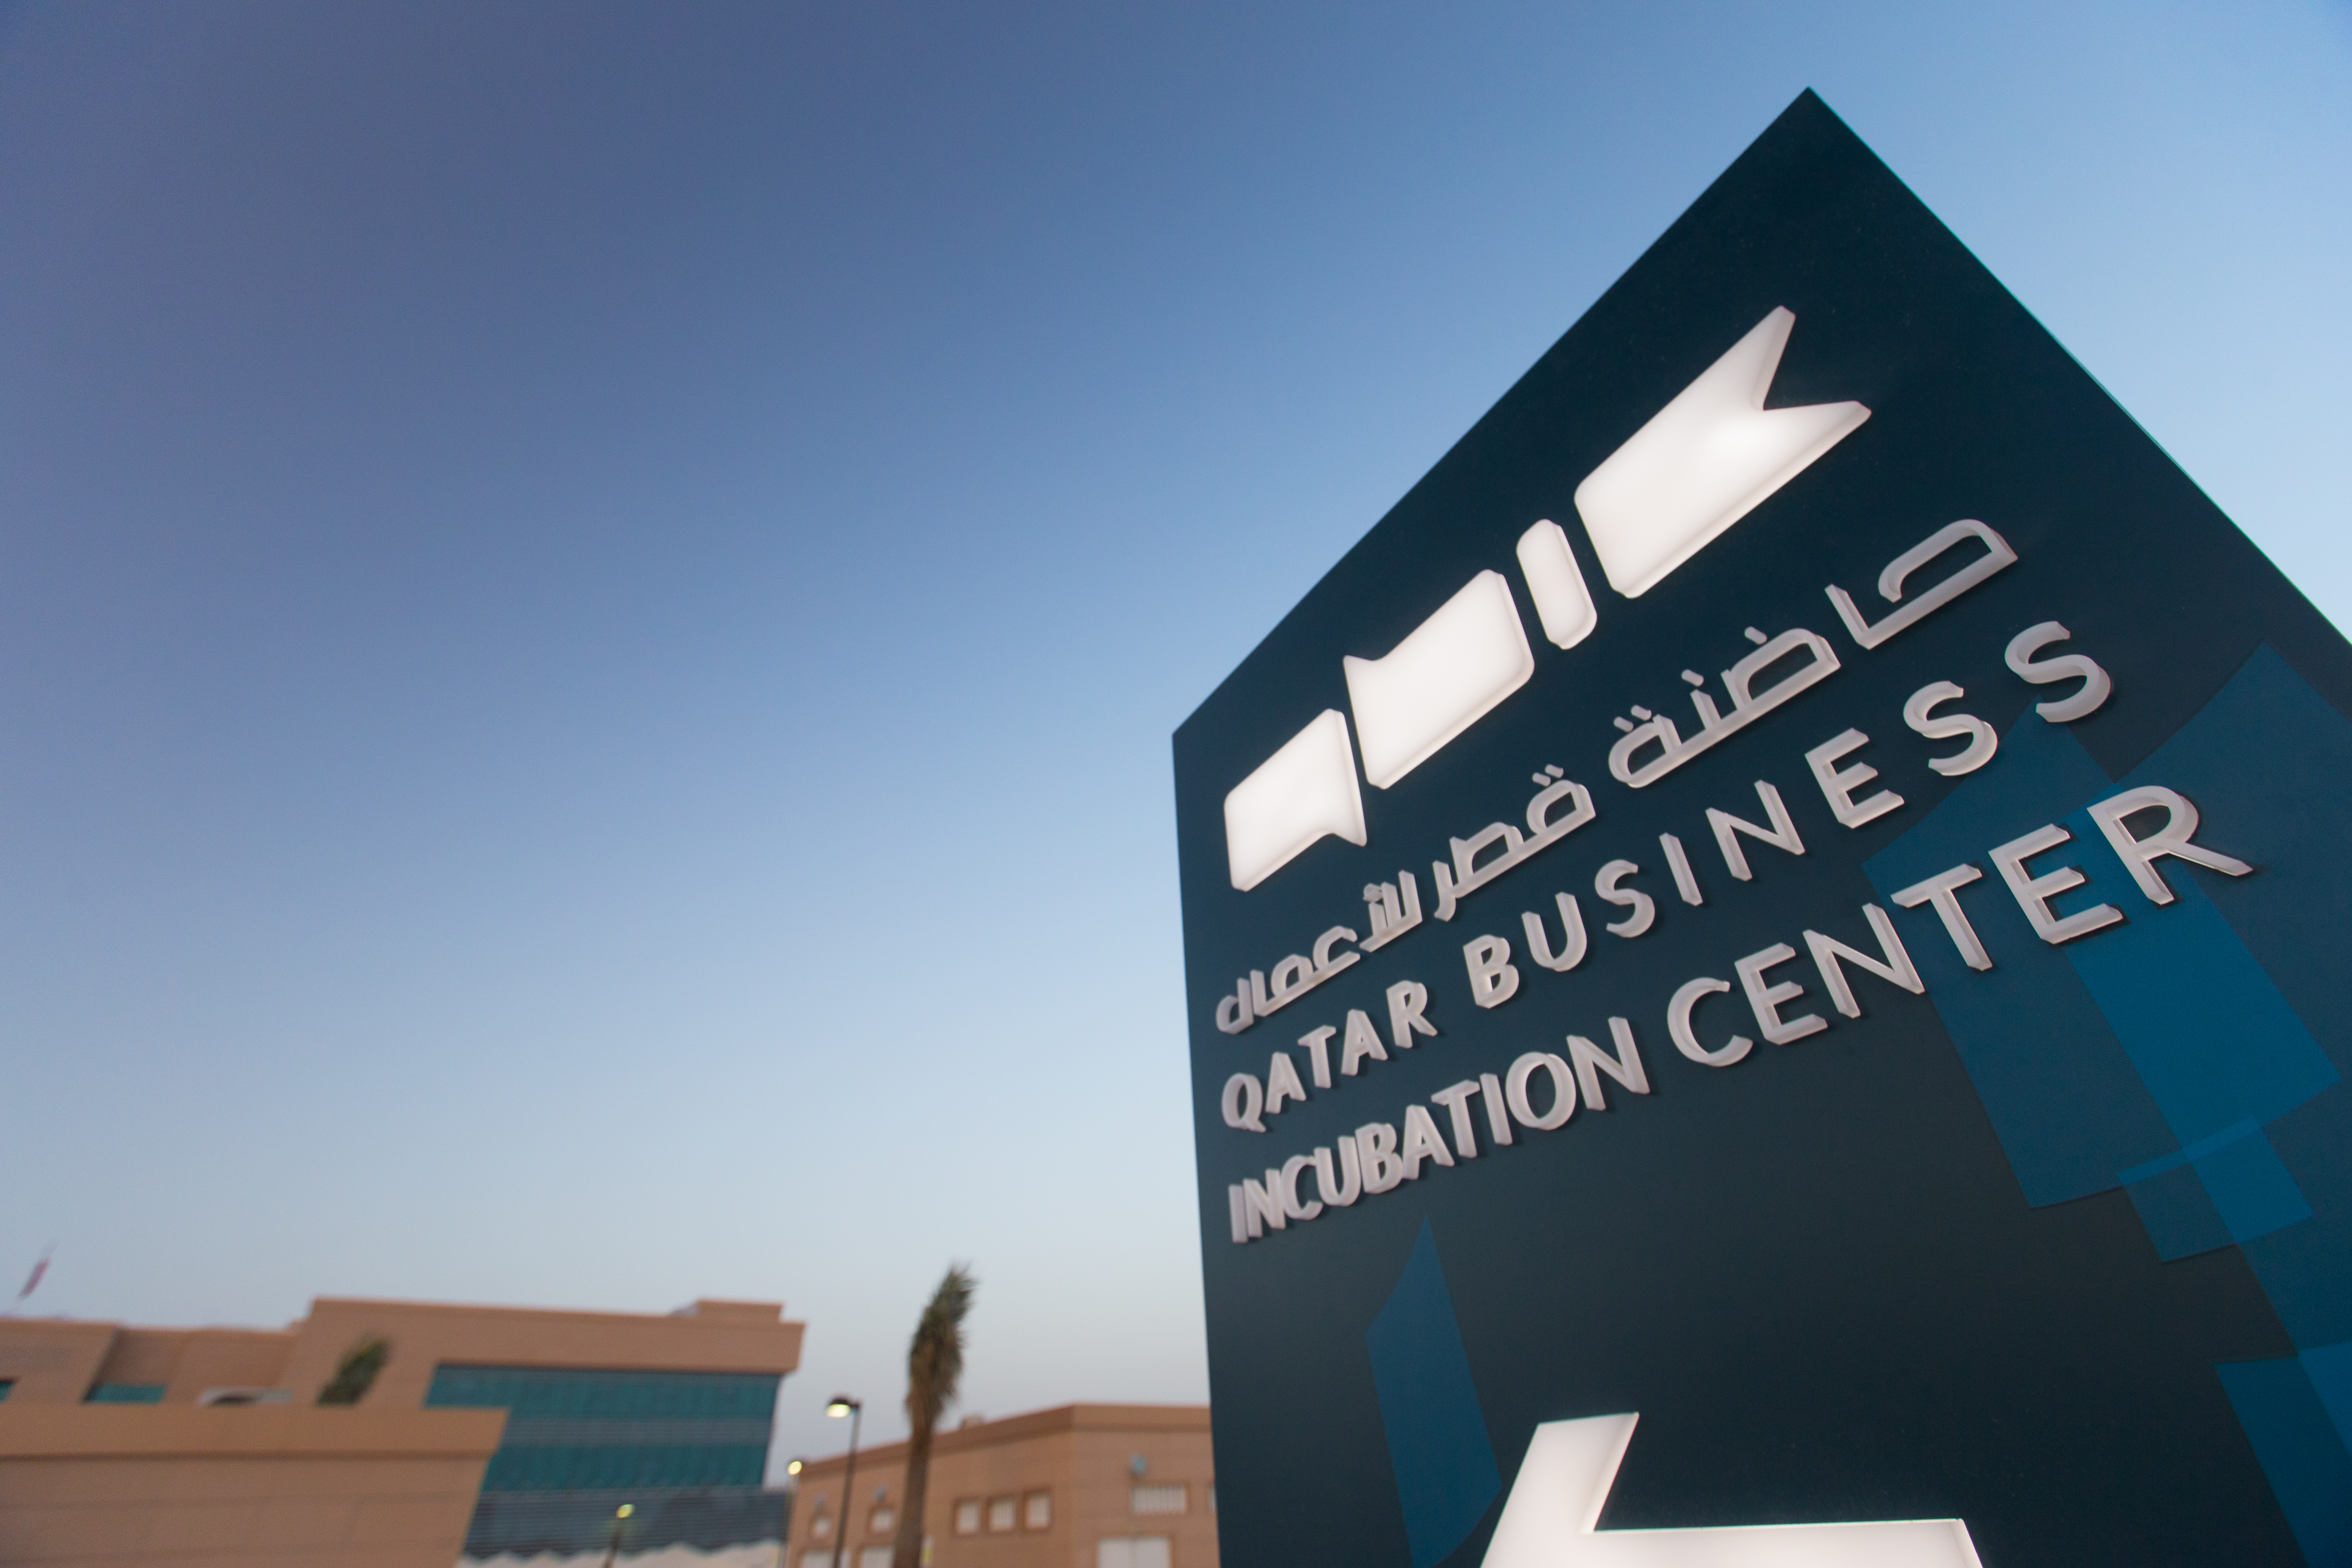 Qatar Business Incubation Center